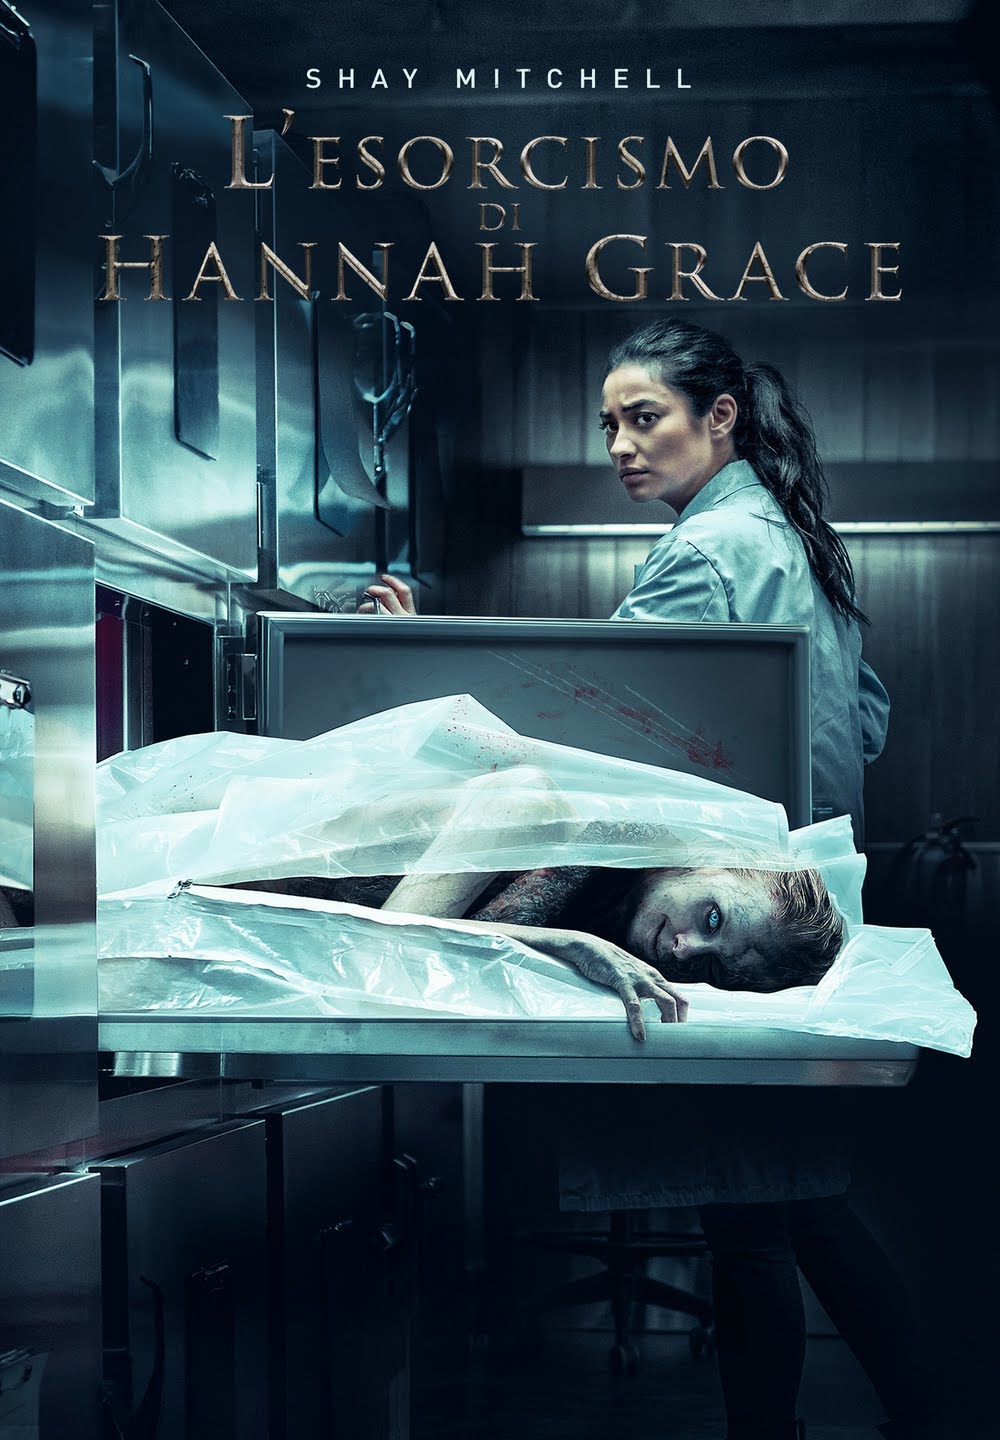 L’esorcismo di Hannah Grace [HD] (2019)